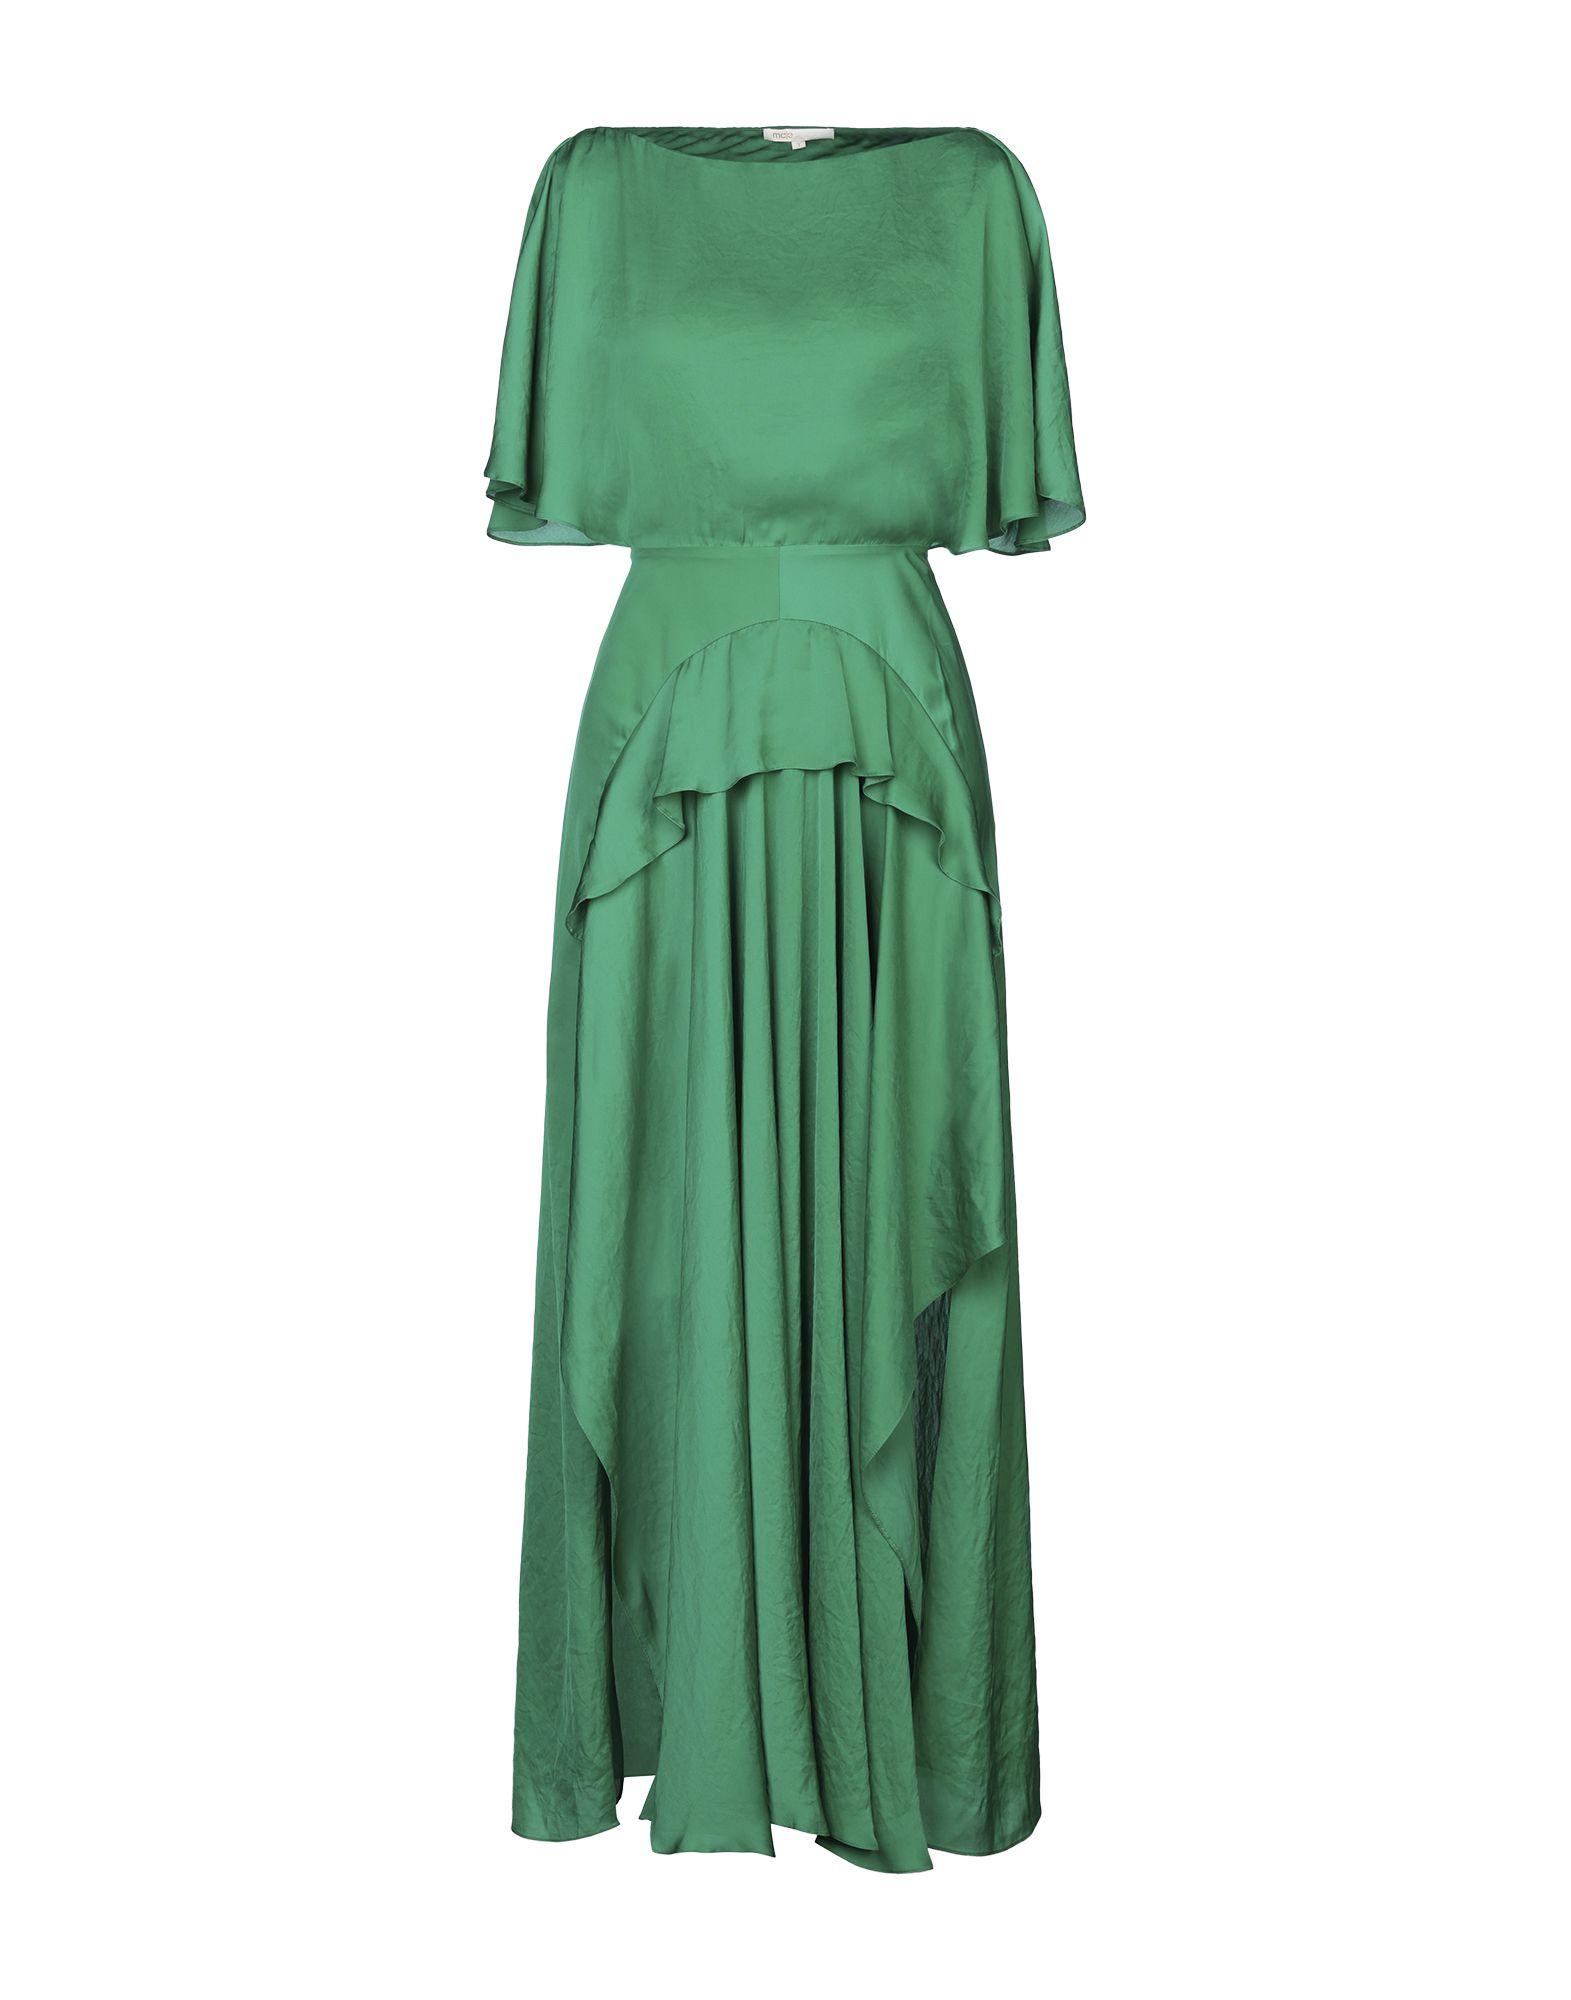 Maje Satin Long Dress in Green - Lyst